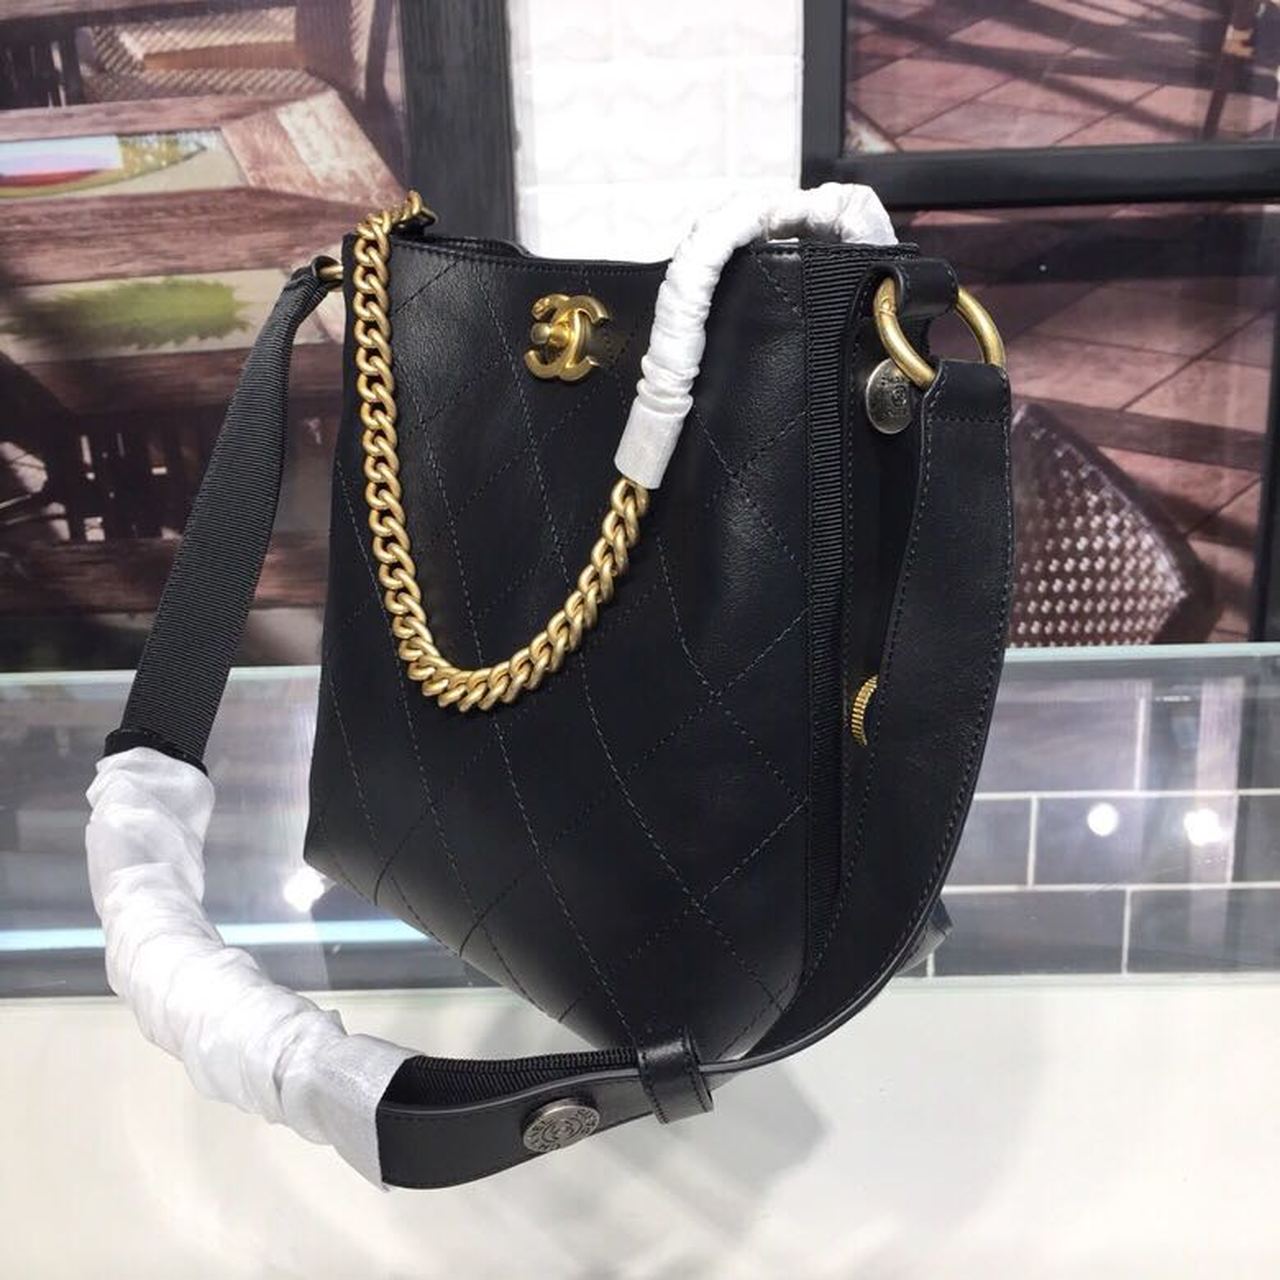 Chanel Hobo Handbag Black best quality